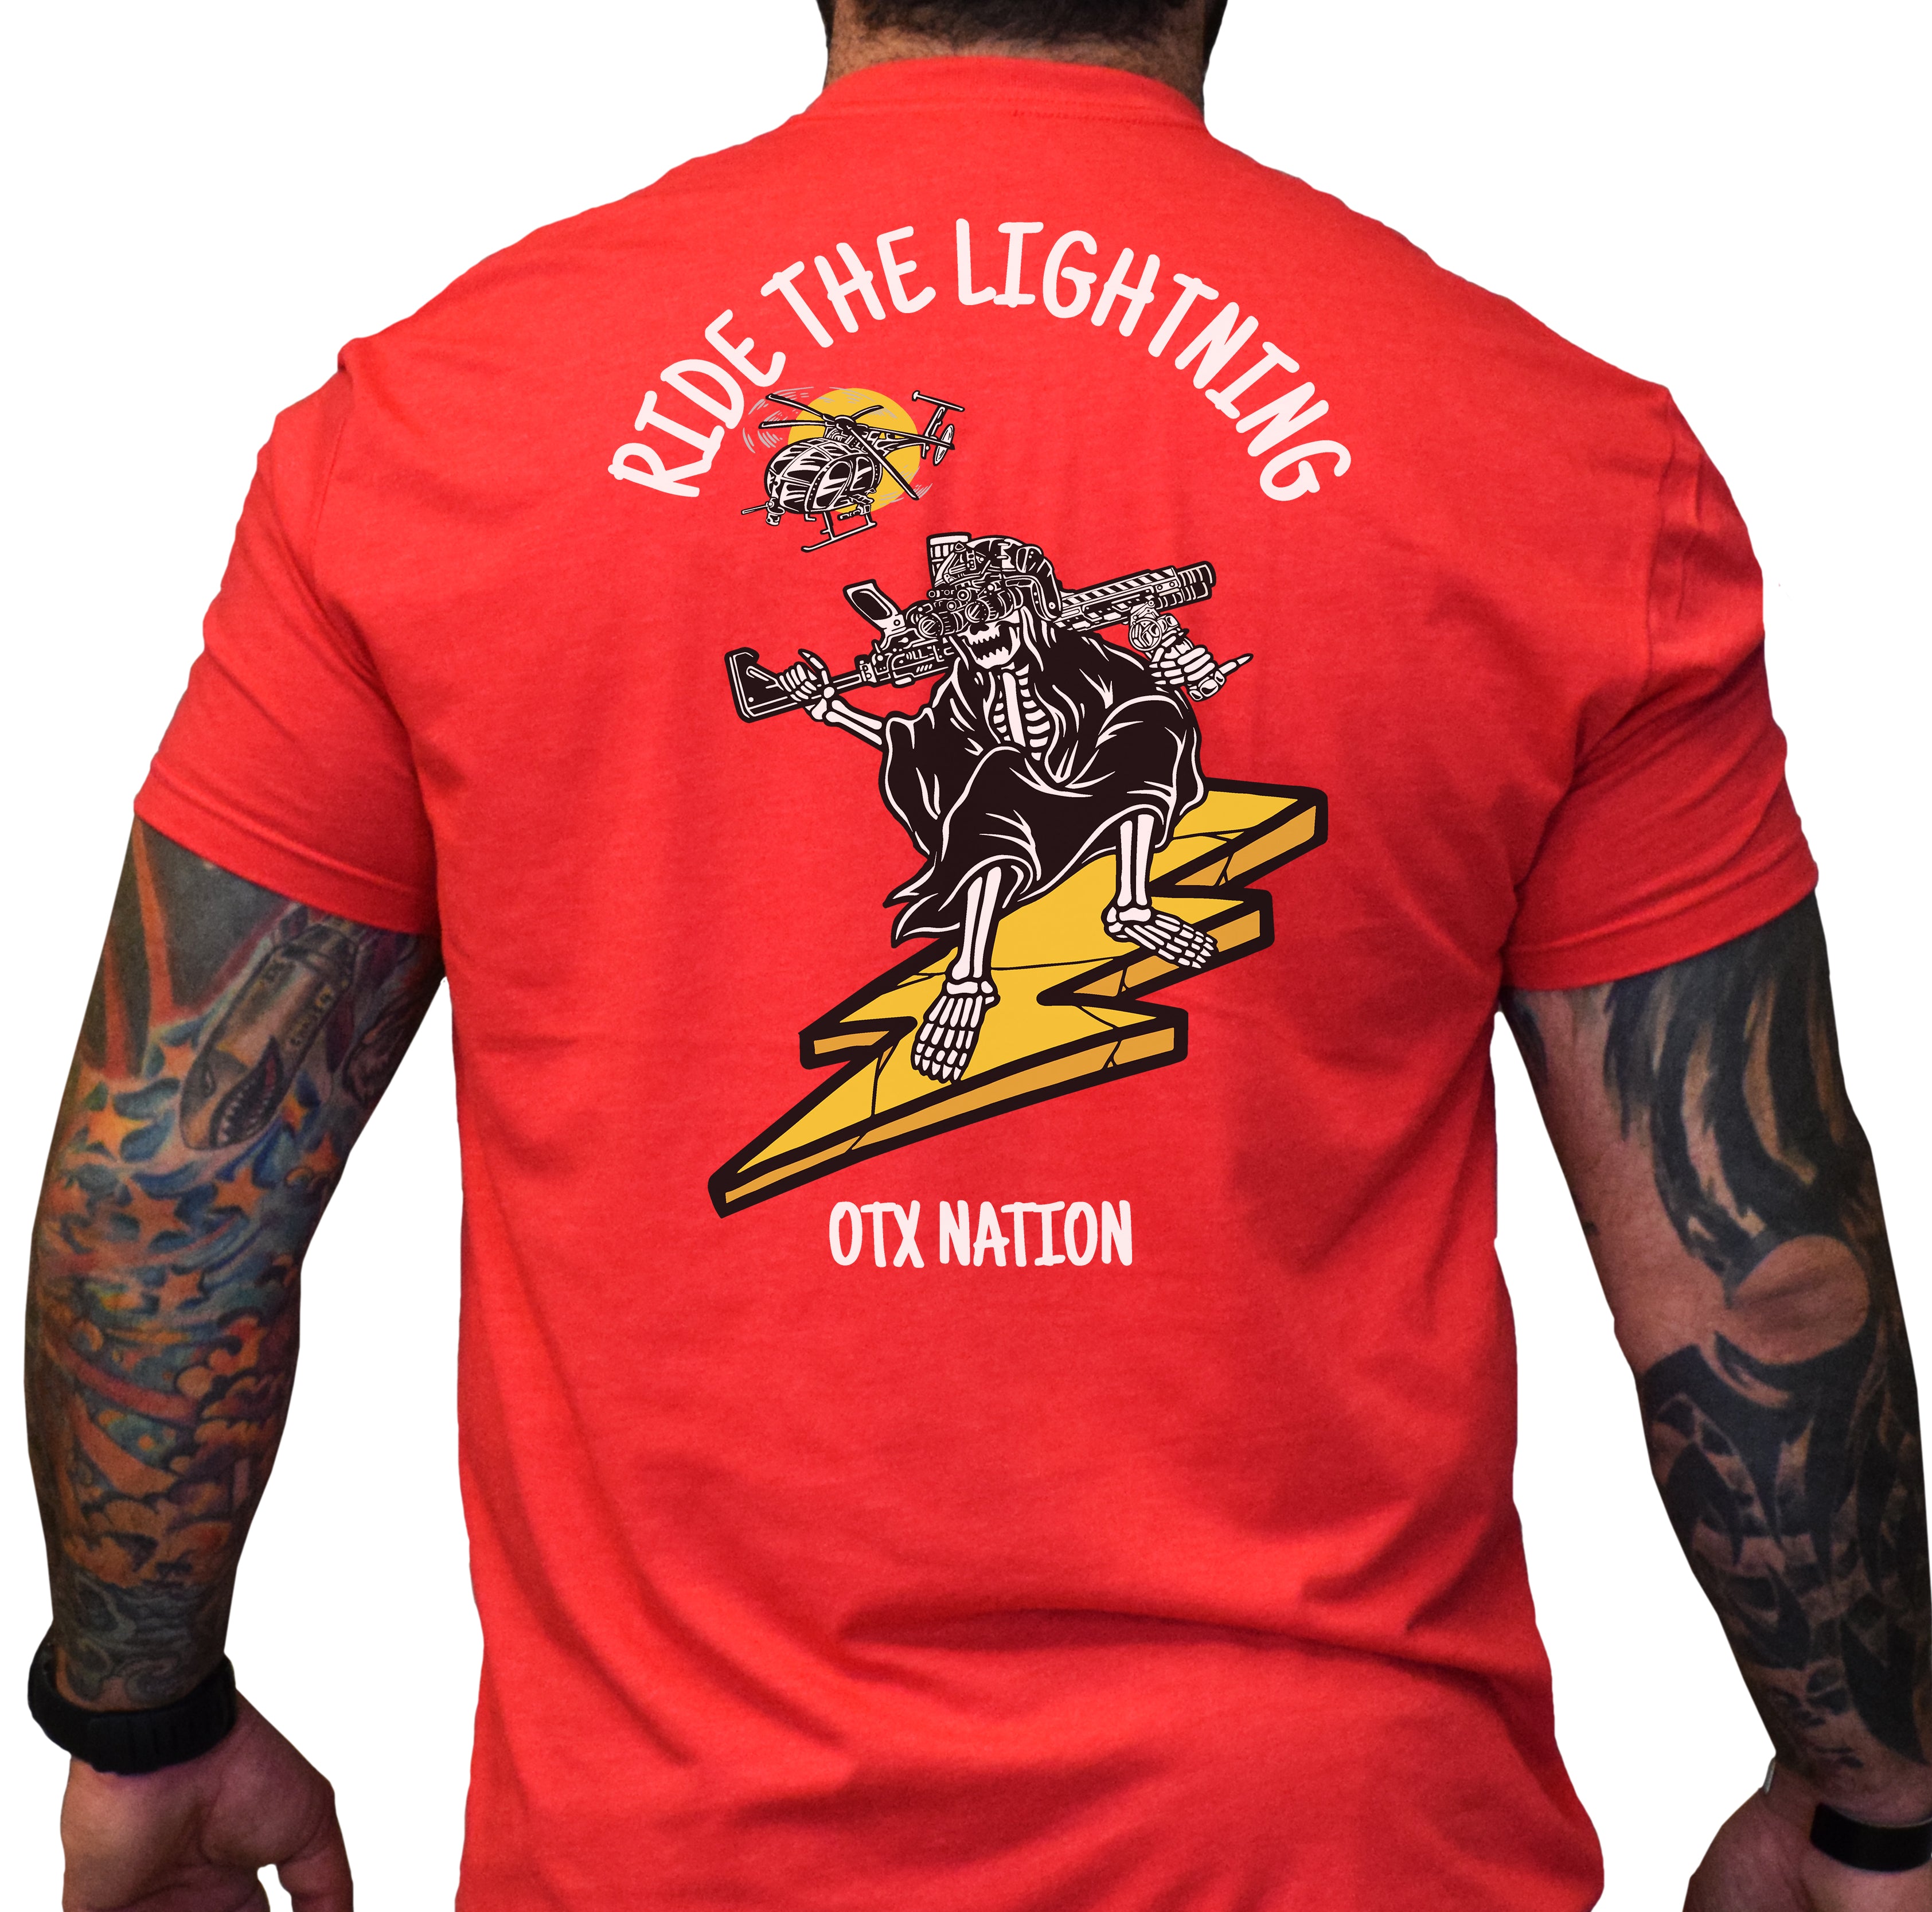 Ride The Lightning